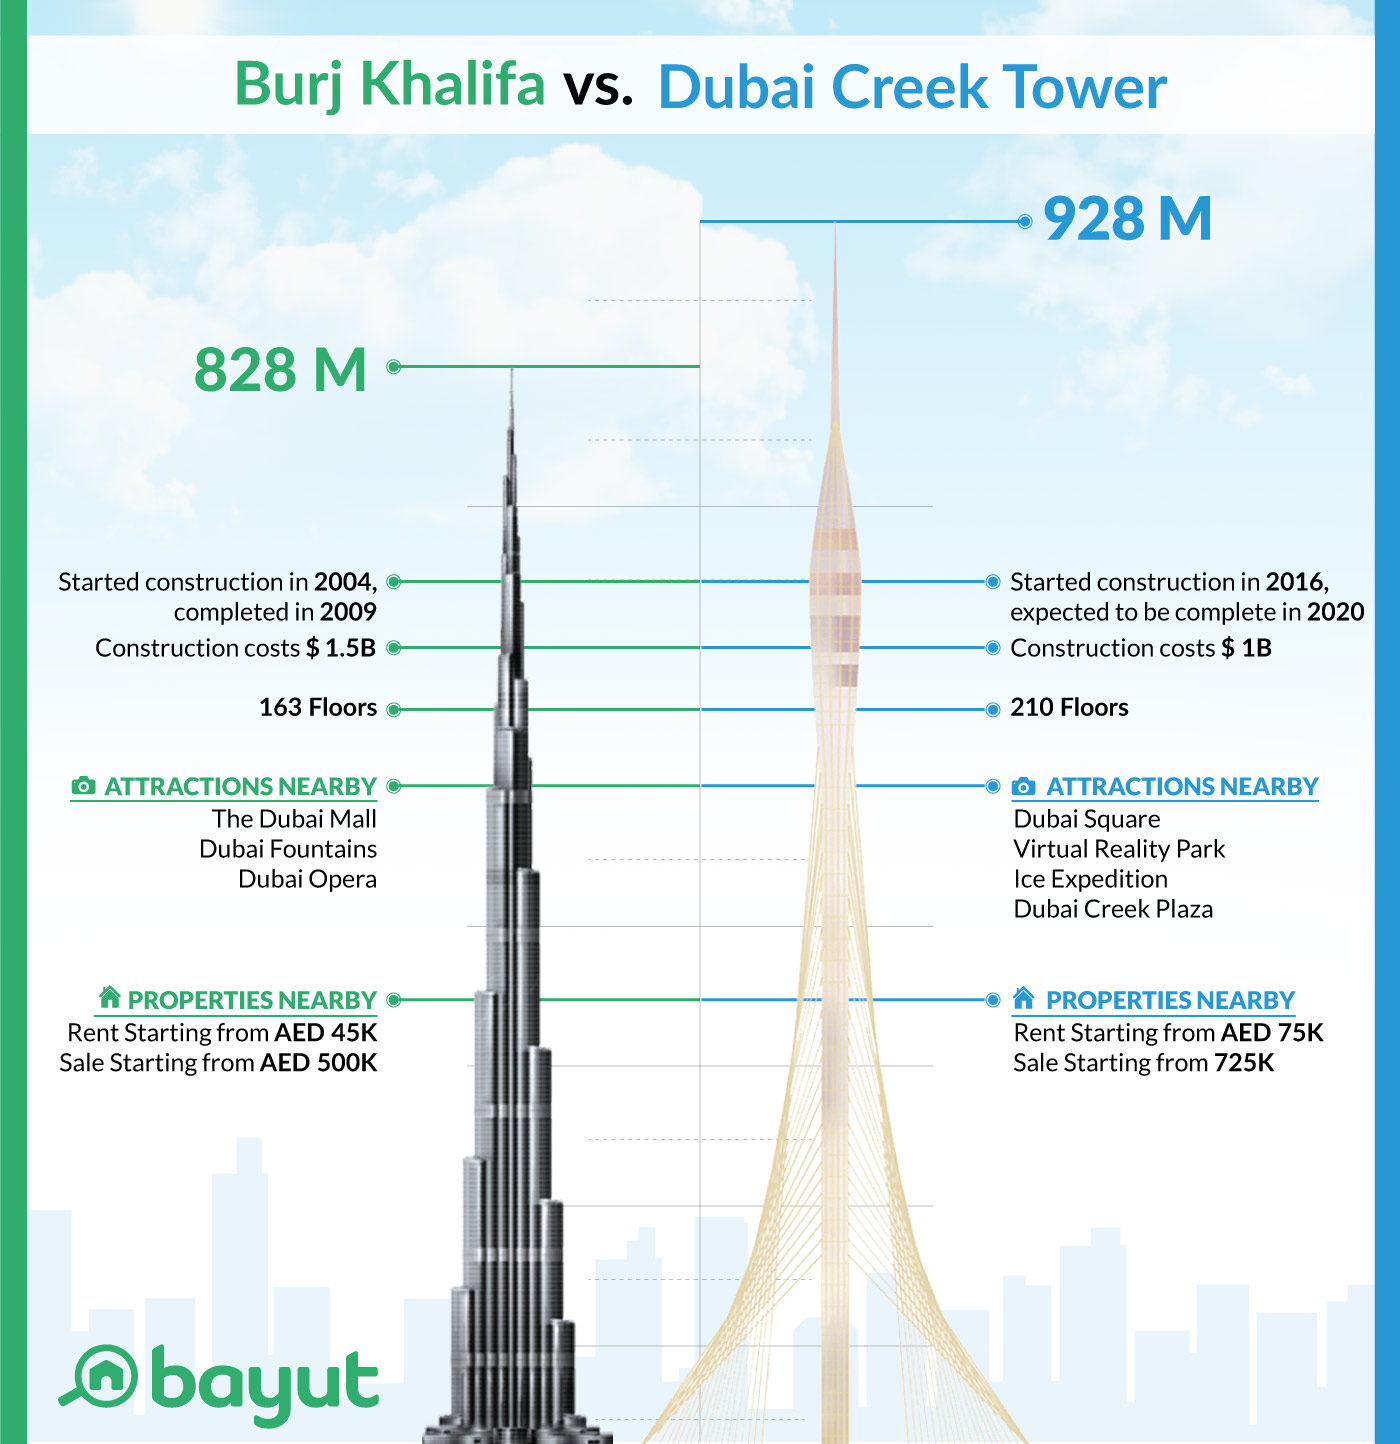 Бурдж халифа цена билета. Дубай крик Тауэр. Новая башня в Дубае выше Бурдж Халифа. Dubai Creek Tower высота. Высота 125 этажа Бурдж Халифа Дубай.